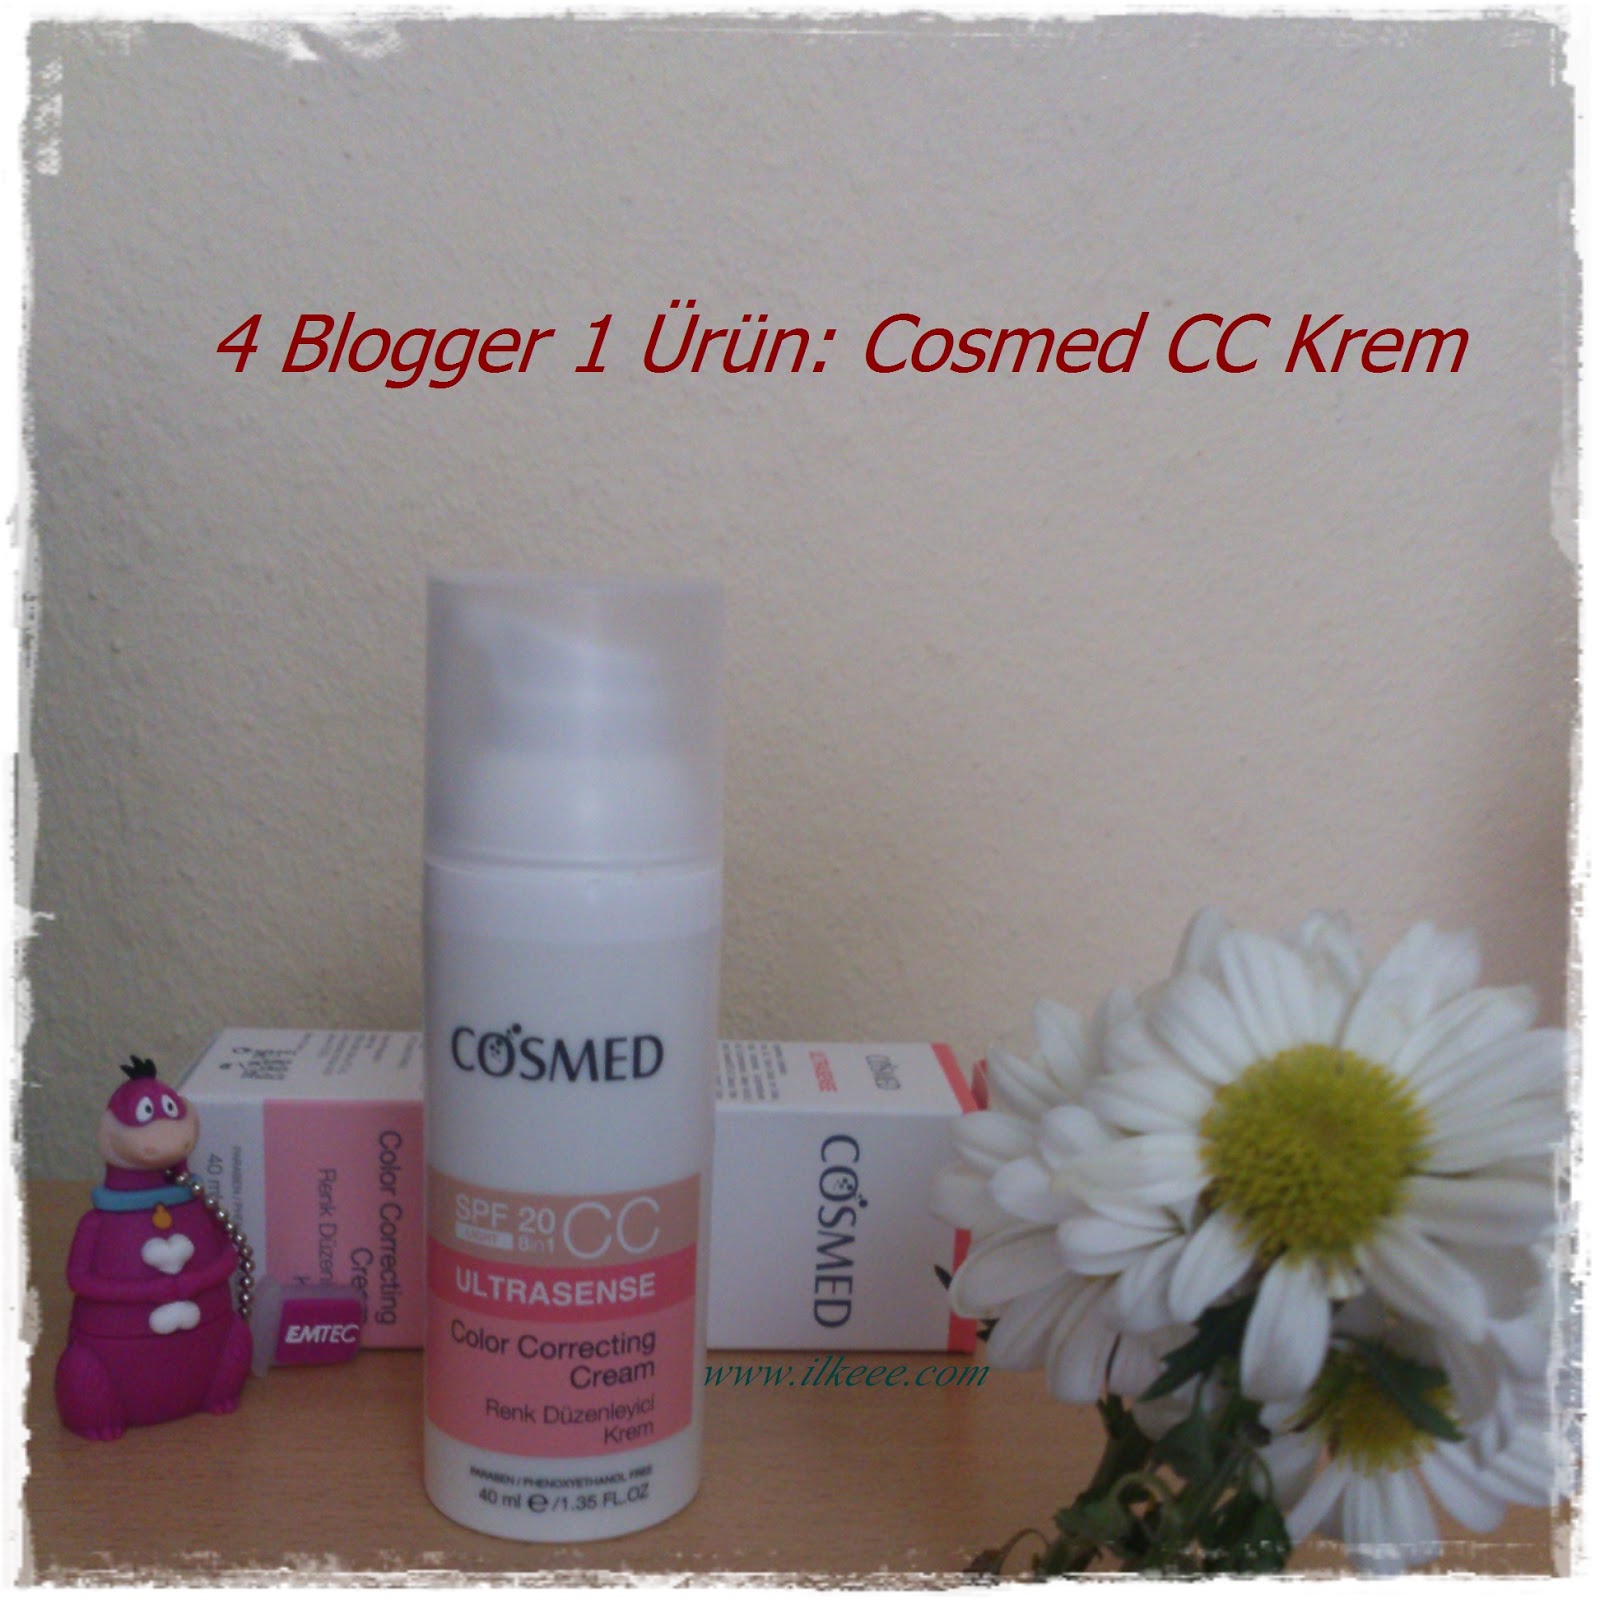 Cosmed - Cosmed CC Krem - Cosmed ultrasense Colour Correcting Cream - Cosmed CC Krem kullananlar - Cosmed CC Krem deneyimleri